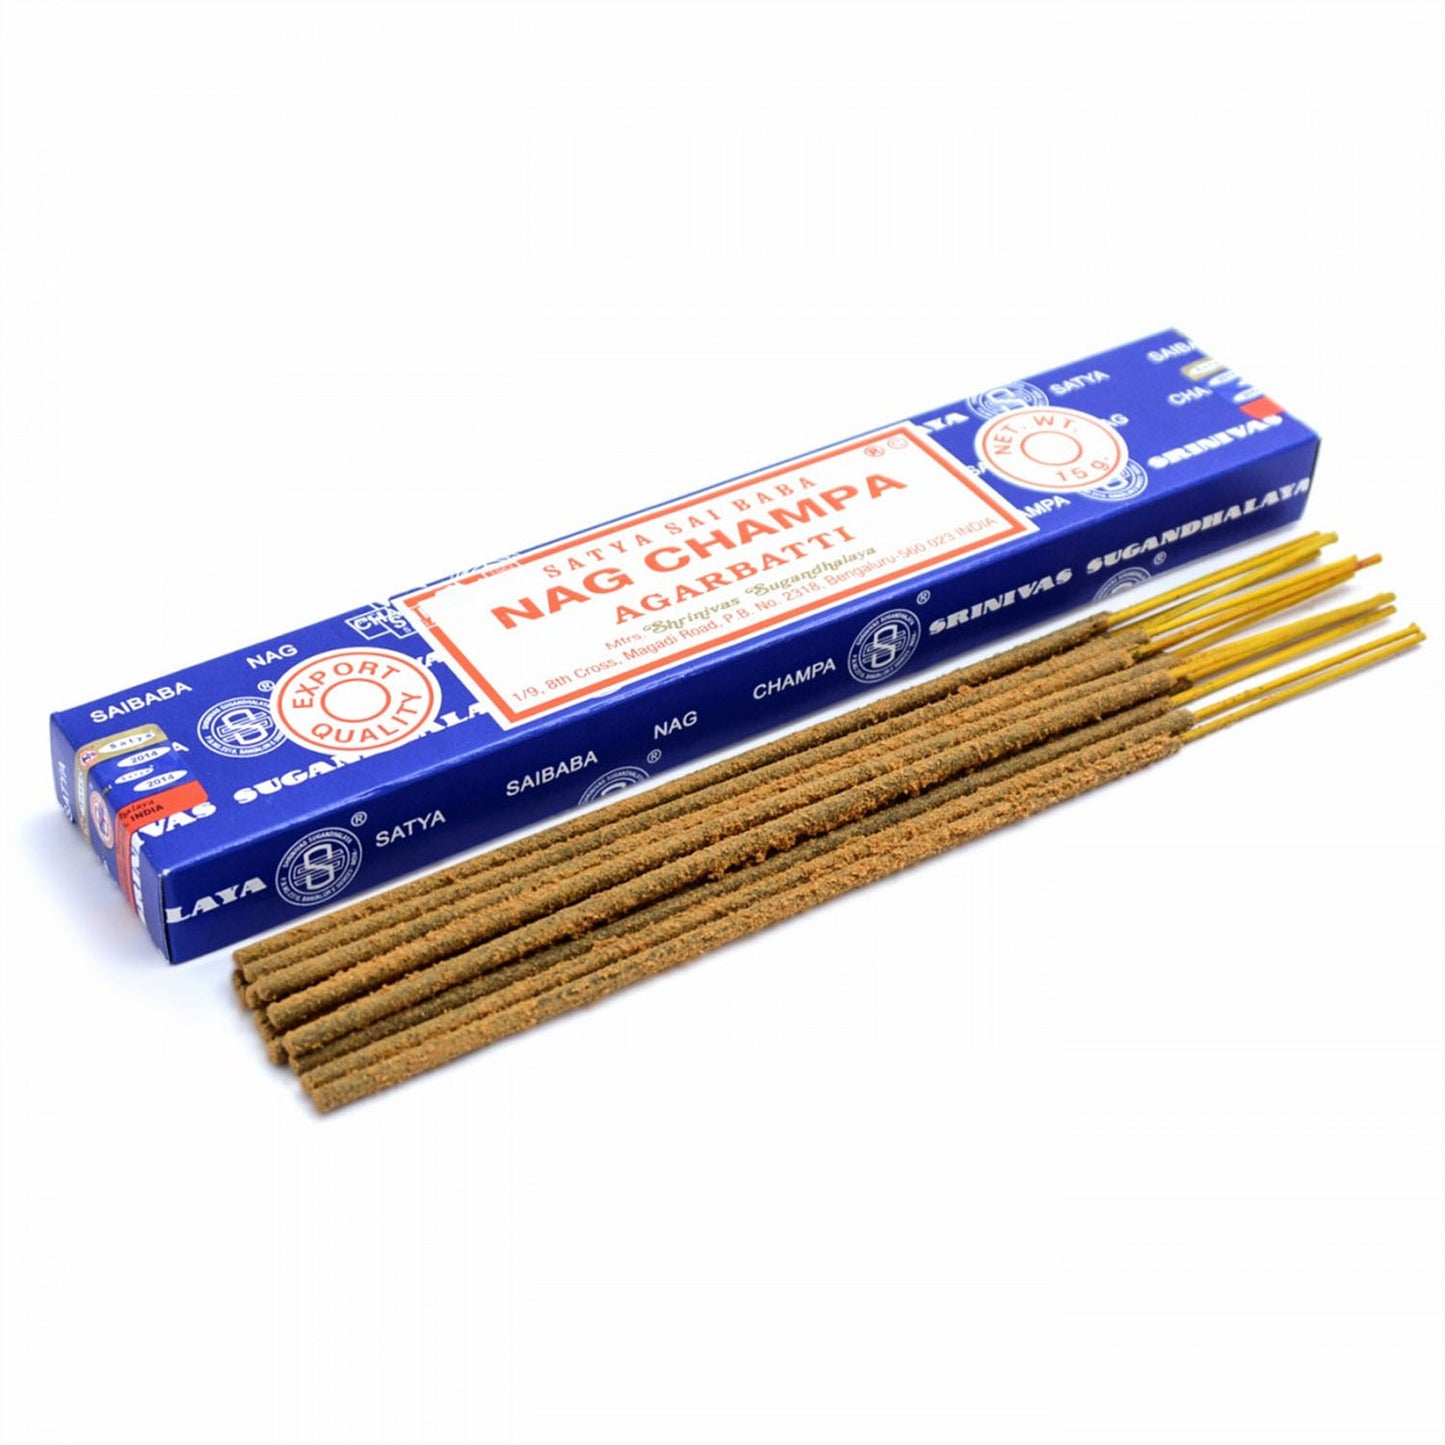 Ganesha Handicrafts-Nag Champa Agarbatti Incense Sticks, Nag champa agarbatti, 4 x Nag chamba agarbatti, Champa agarbatti..